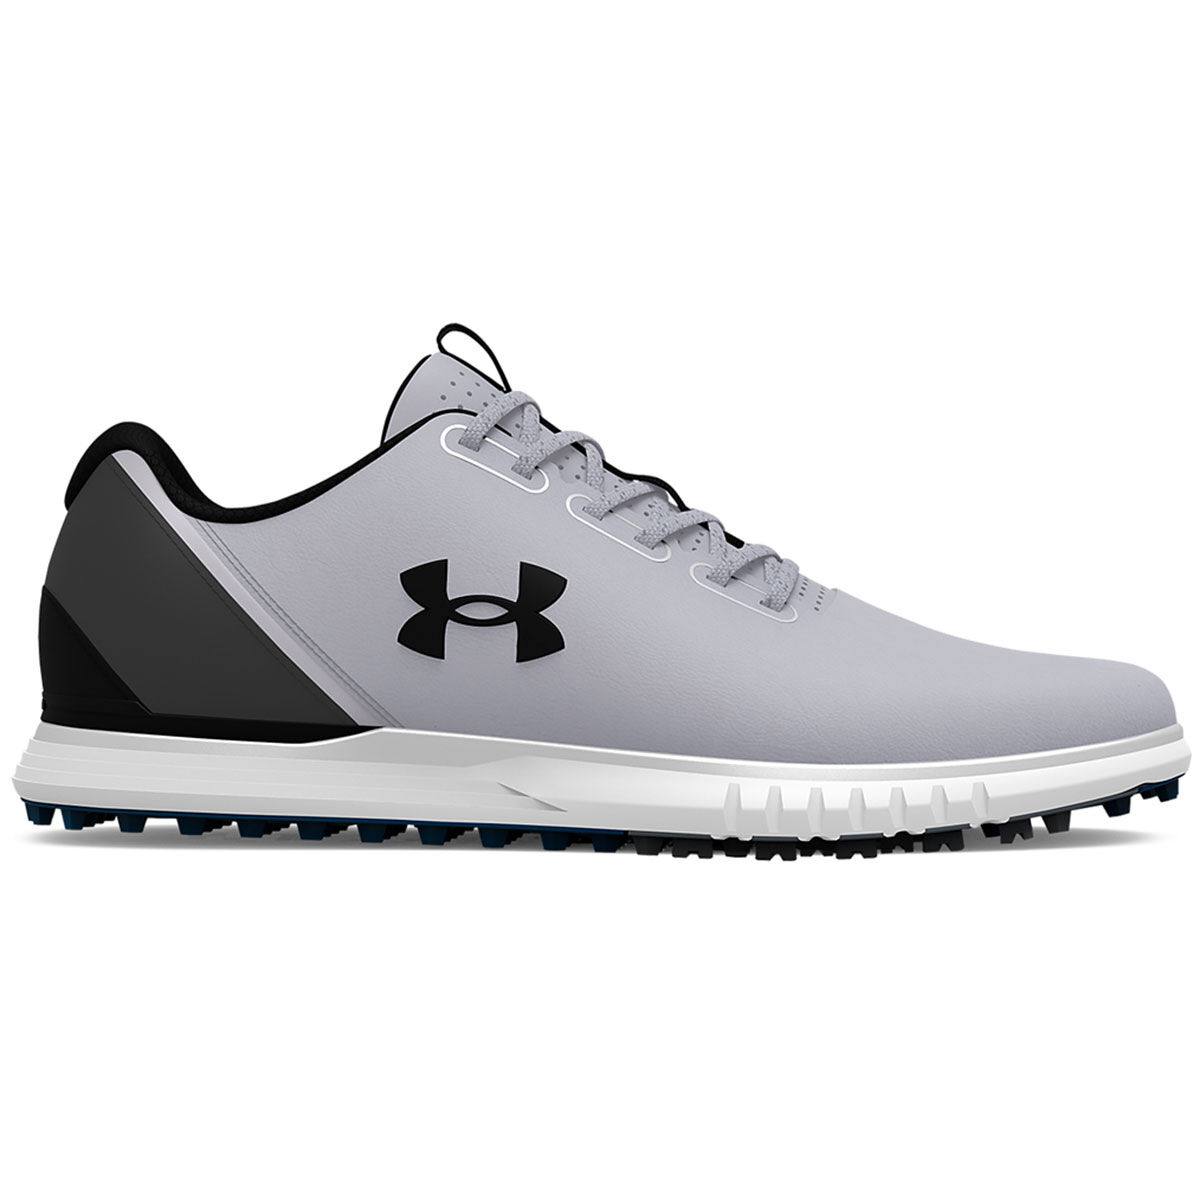 Under Armour Men’s Medal Waterproof Spikeless Golf Shoes, Mens, Mod gray/jet gray/black, 8.5 | American Golf